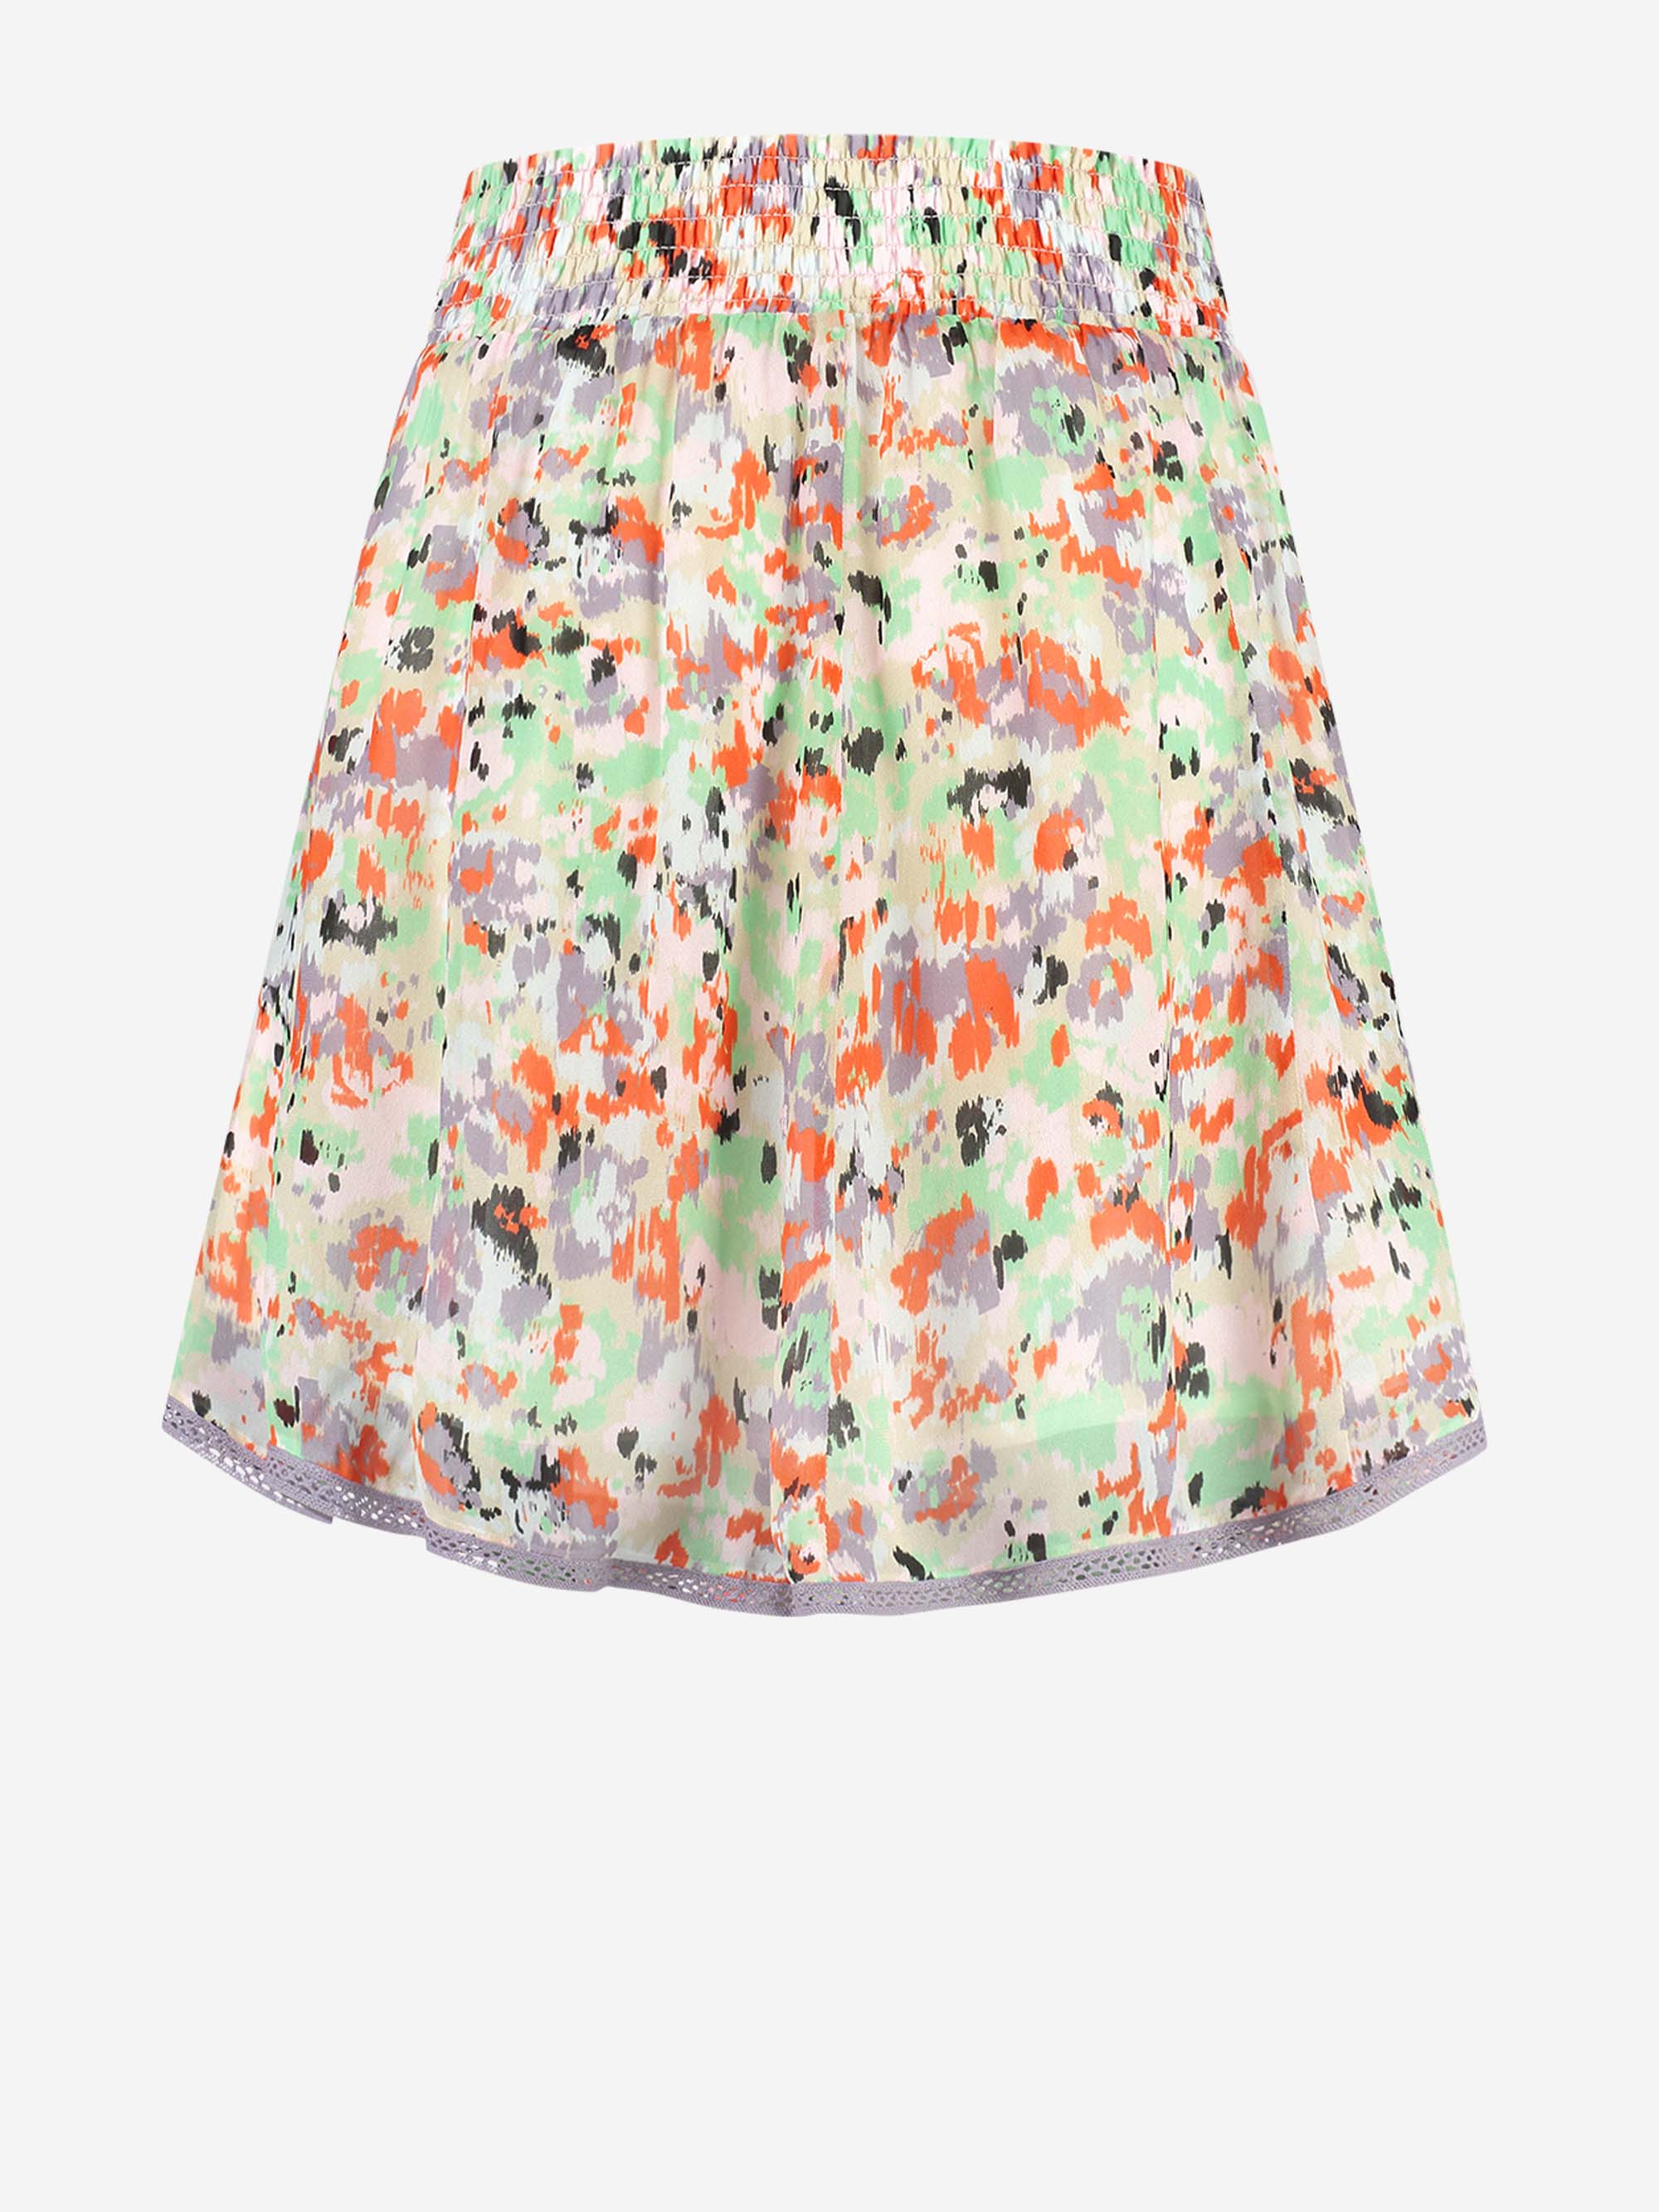  Flower printed skirt with elastic waistband